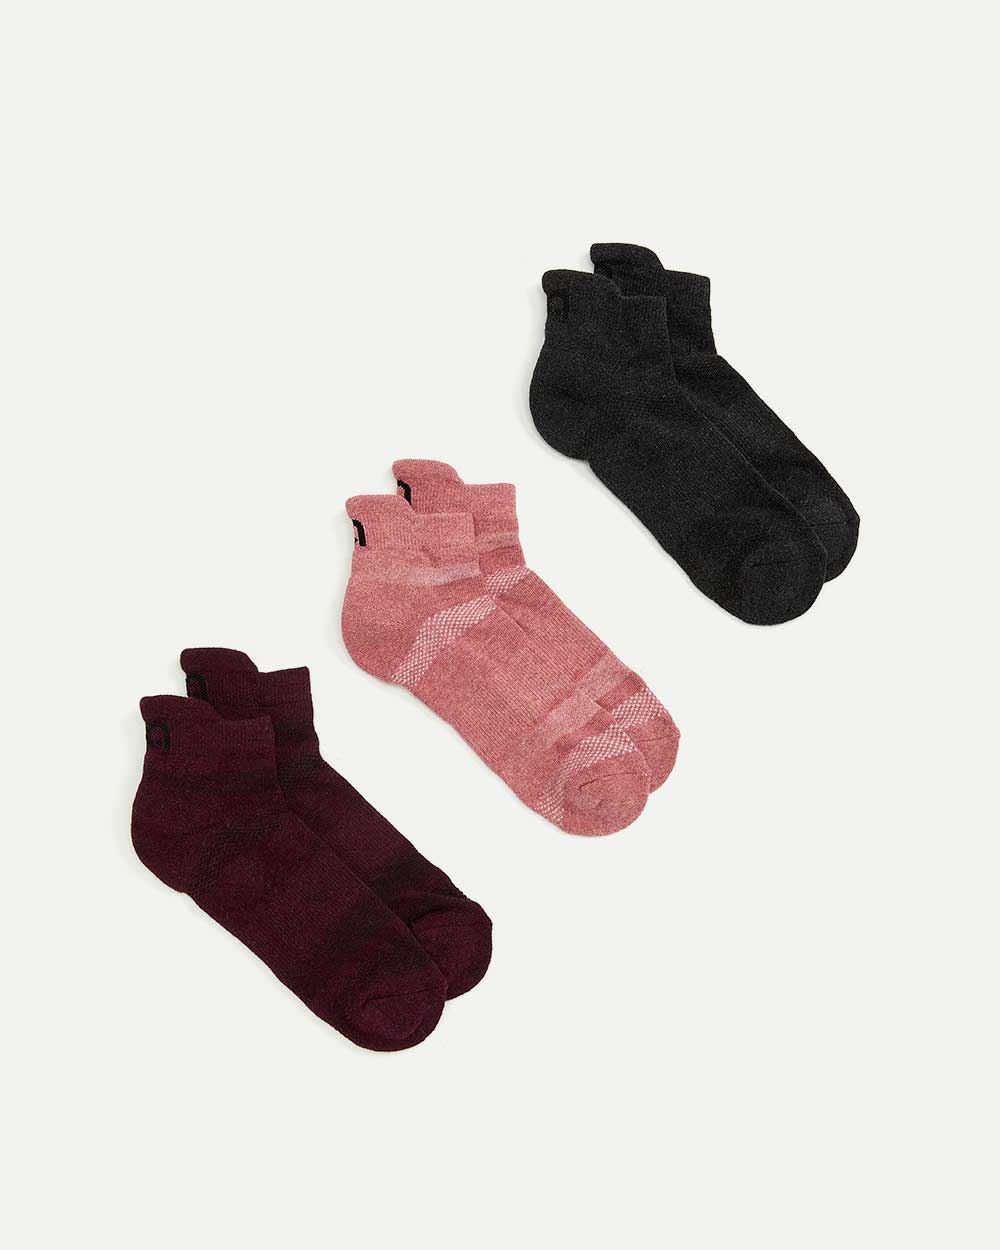 Hyba Multi-Sport Socks